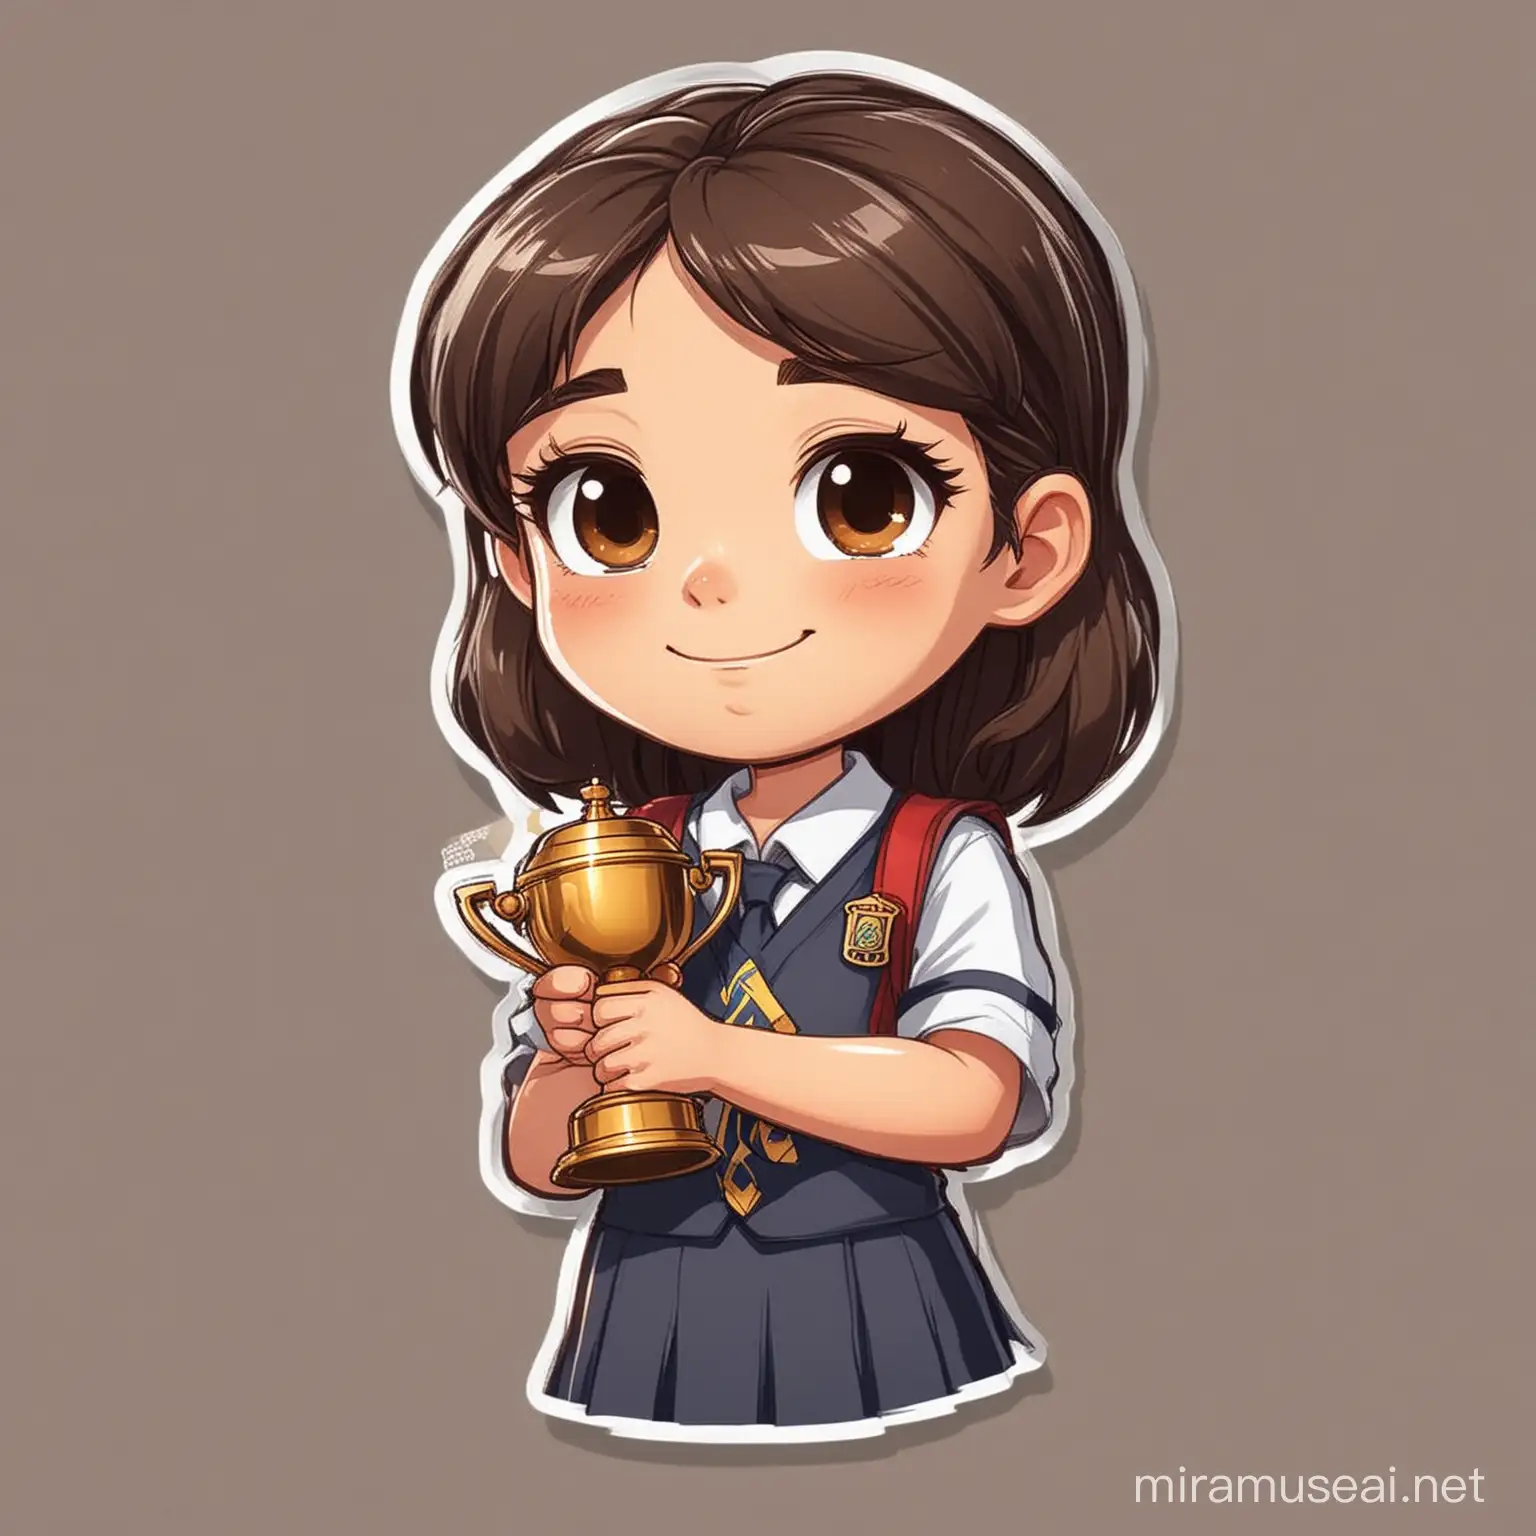 girl, wearing school uniform, carrying a trophy, cartoon sticker style, high level detail, dark brown colored hair